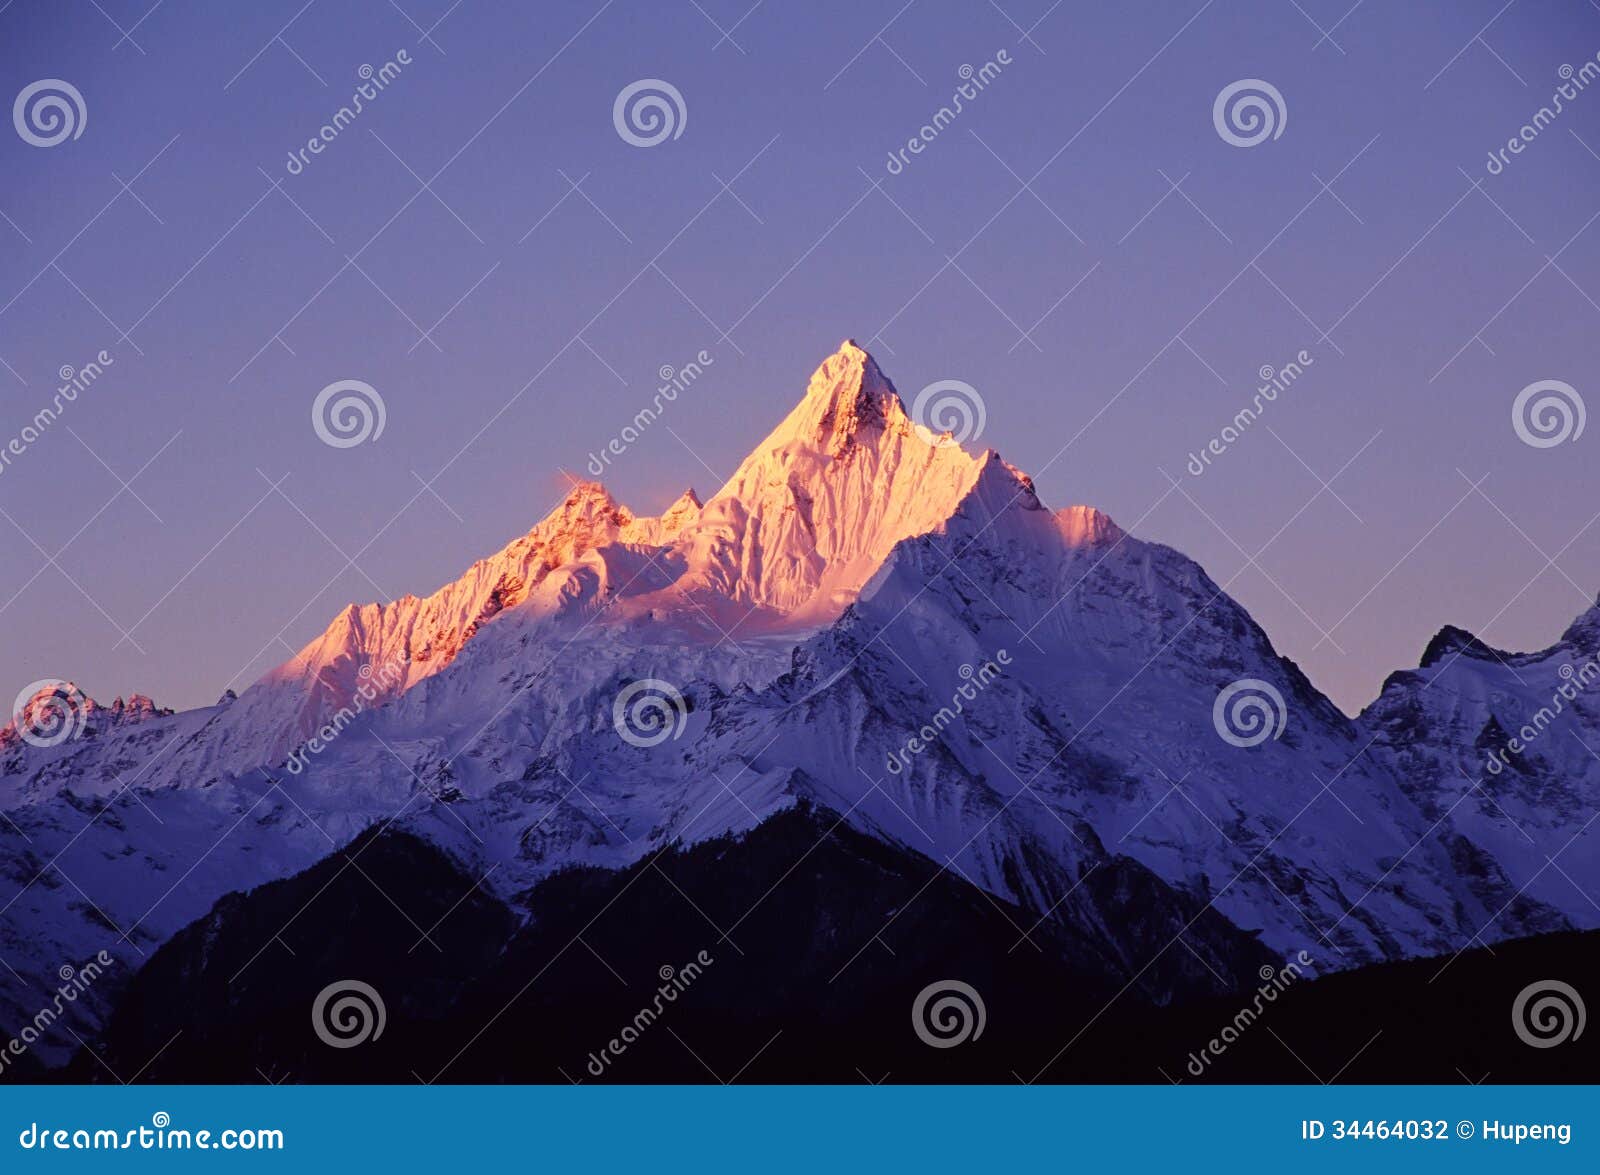 meili snow mountains at sunrise